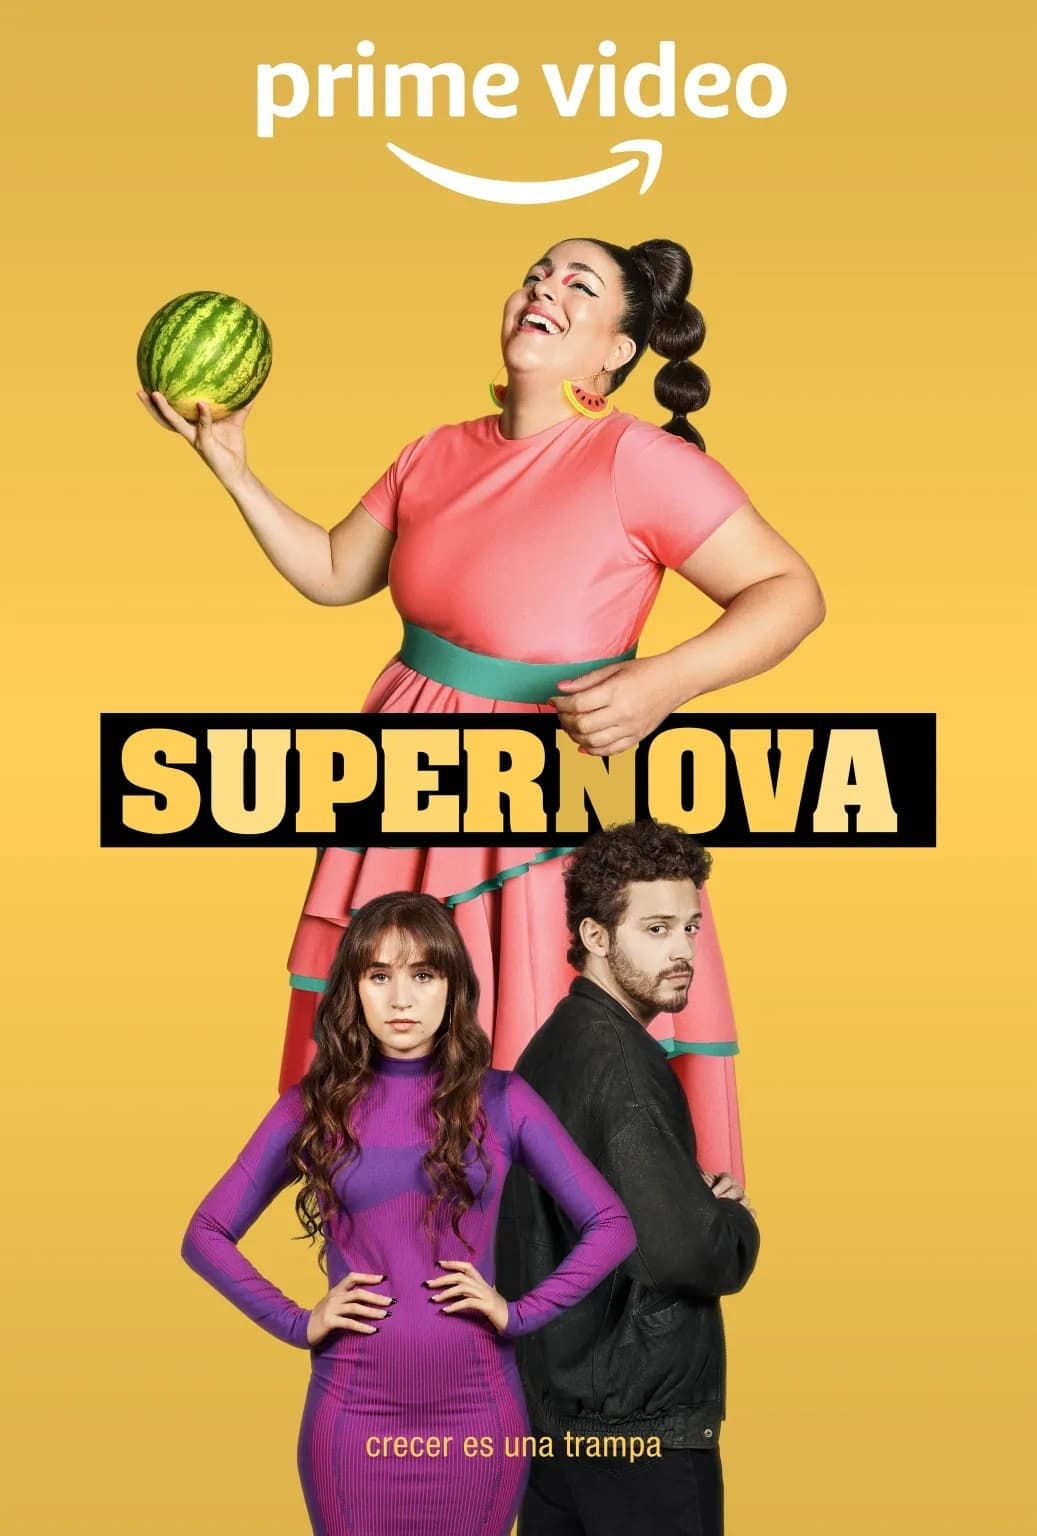 Supernova TV Shows About Relationship